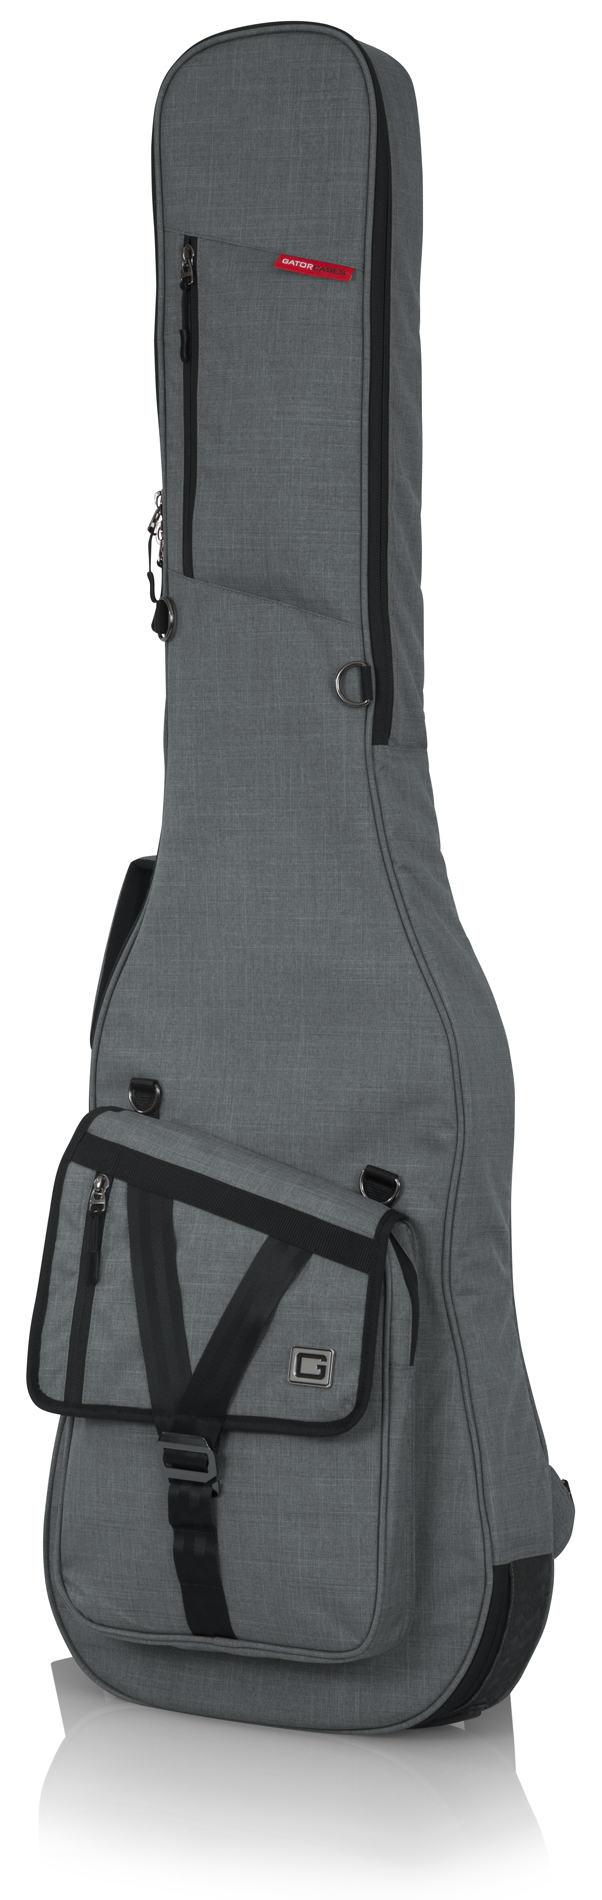 GT-BASS-GRY Transit Bass Guitar Bag, Light Grey